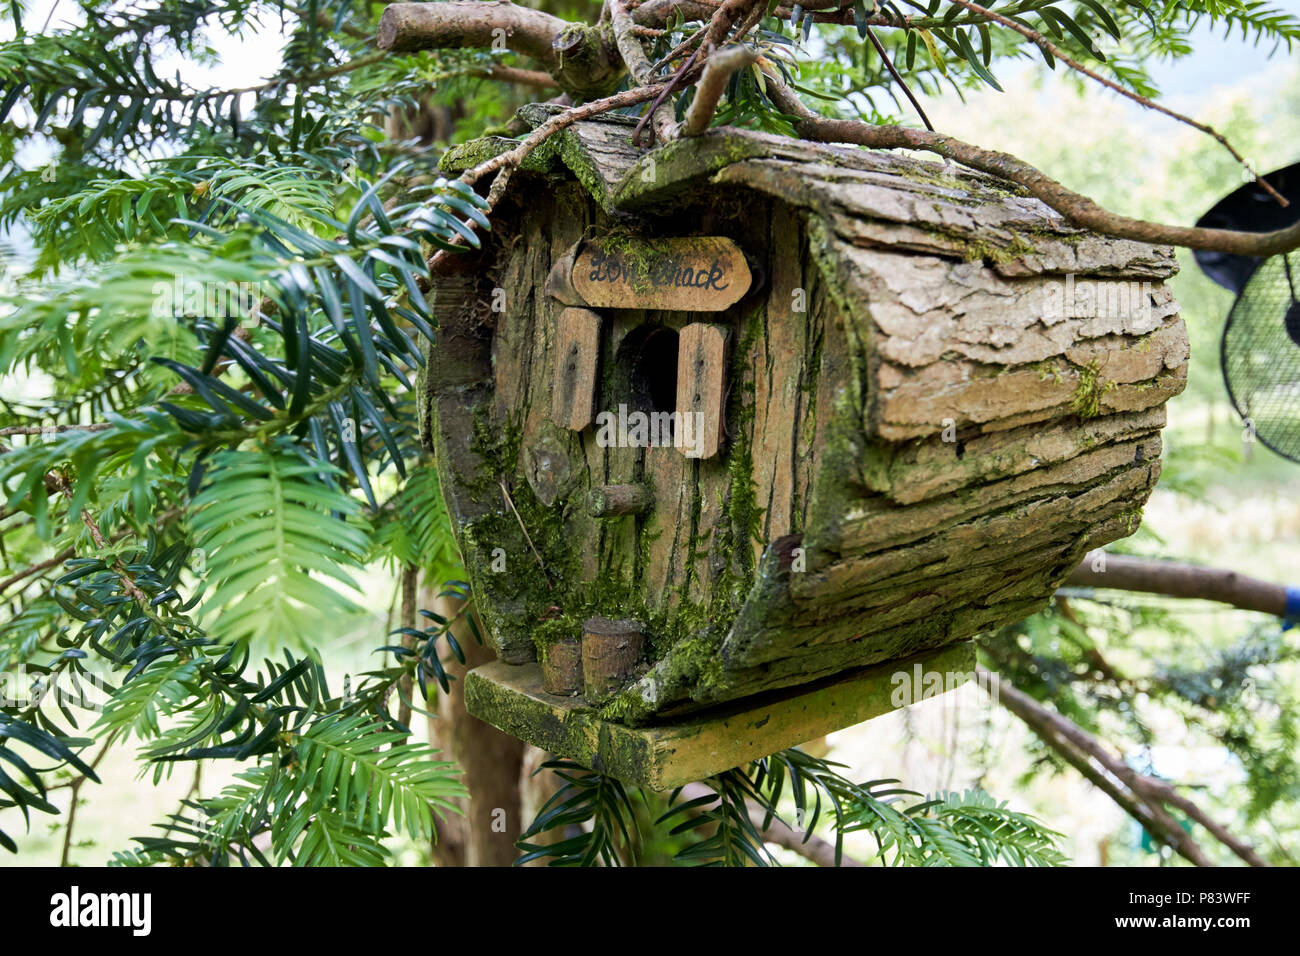 ornate bought bird house birdbox england uk Stock Photo